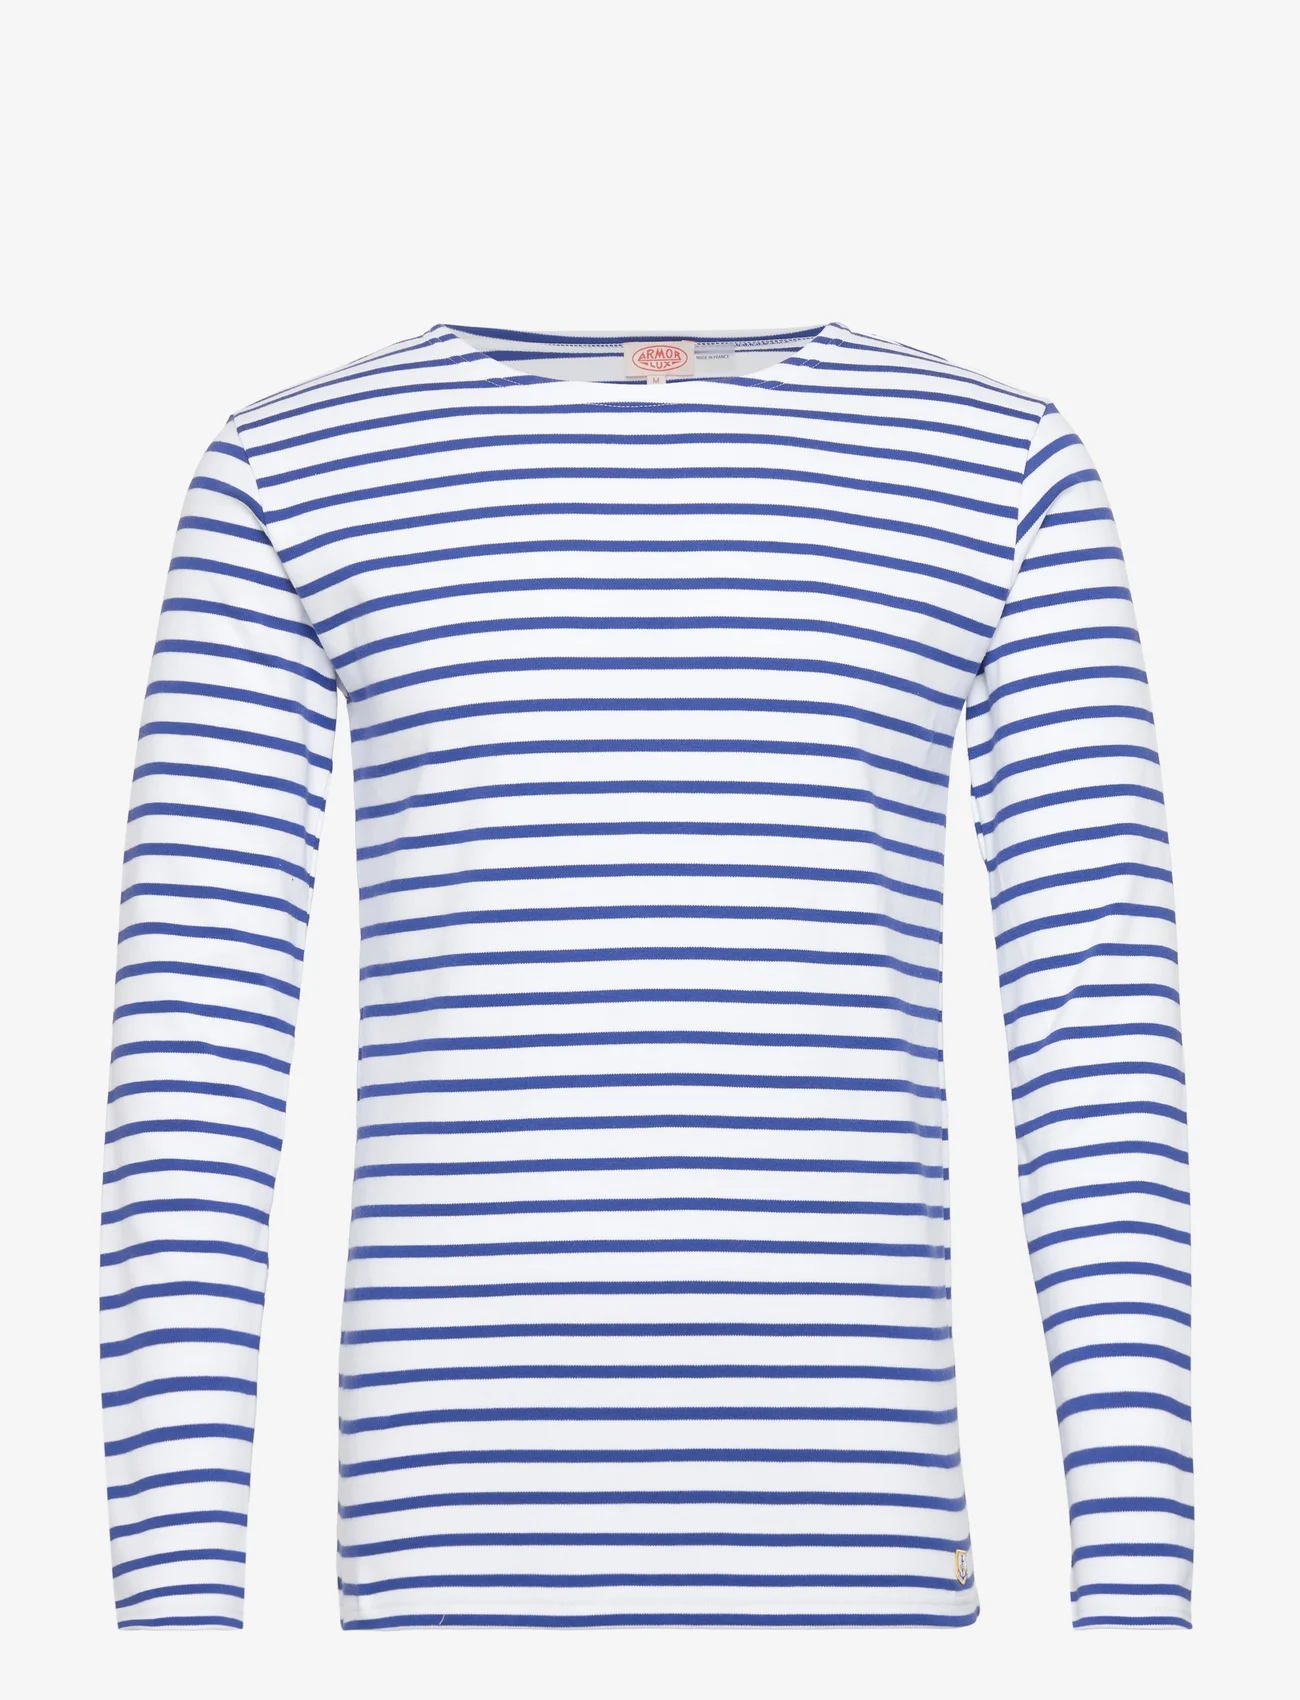 Armor Lux - Breton Striped Shirt Héritage - langærmede t-shirts - white/royal blue - 0